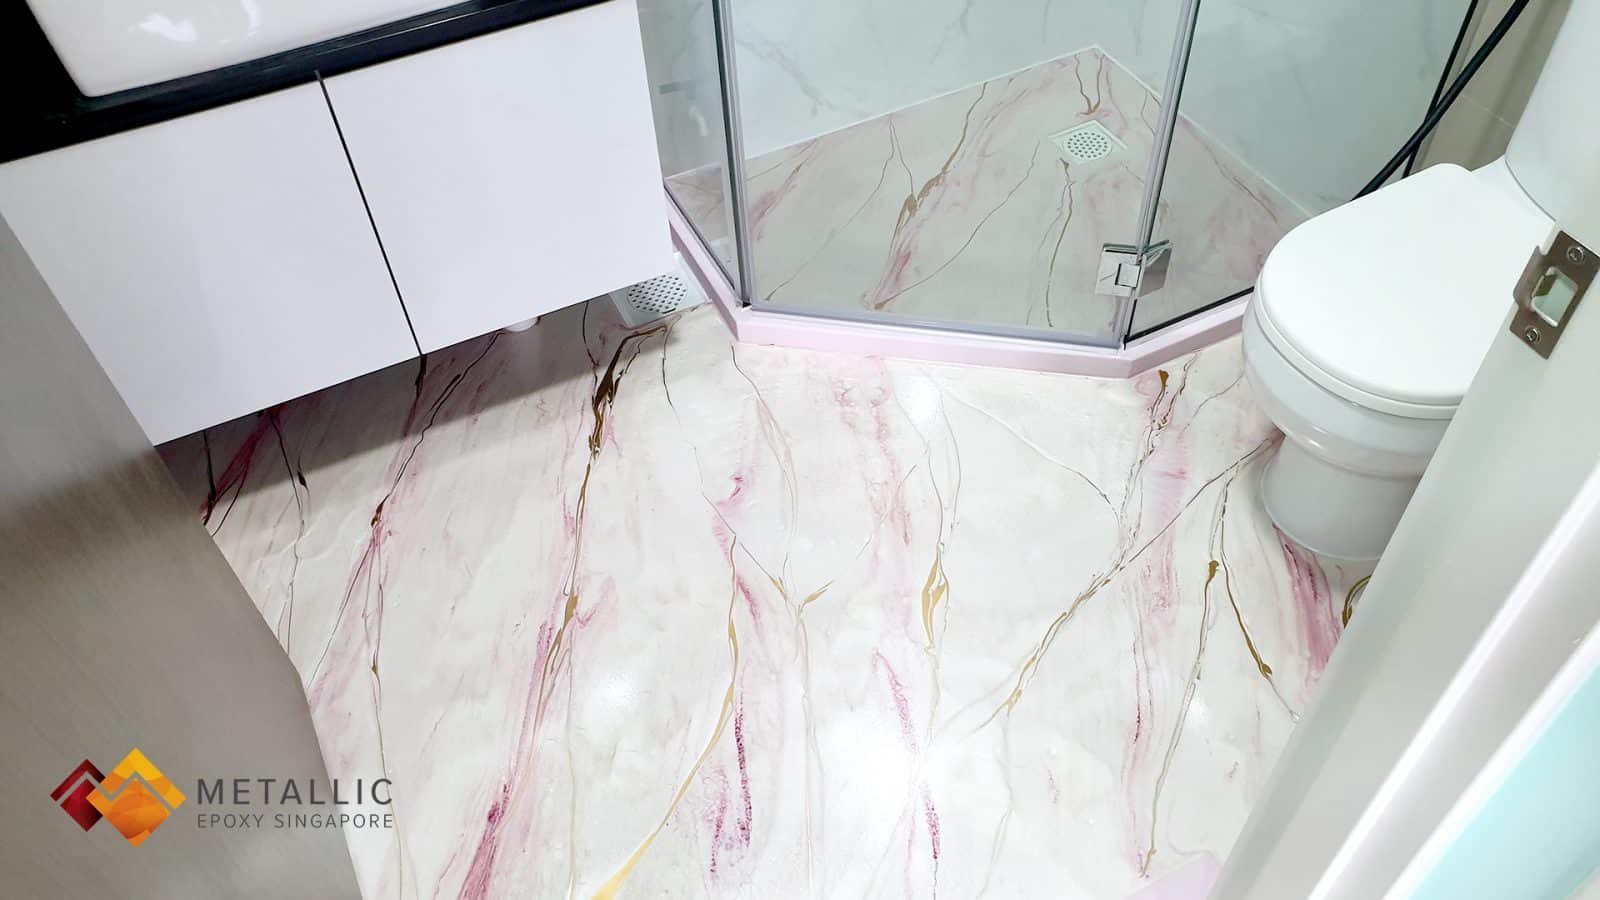 metallic epoxy singapore sakura pink bathroom flooring